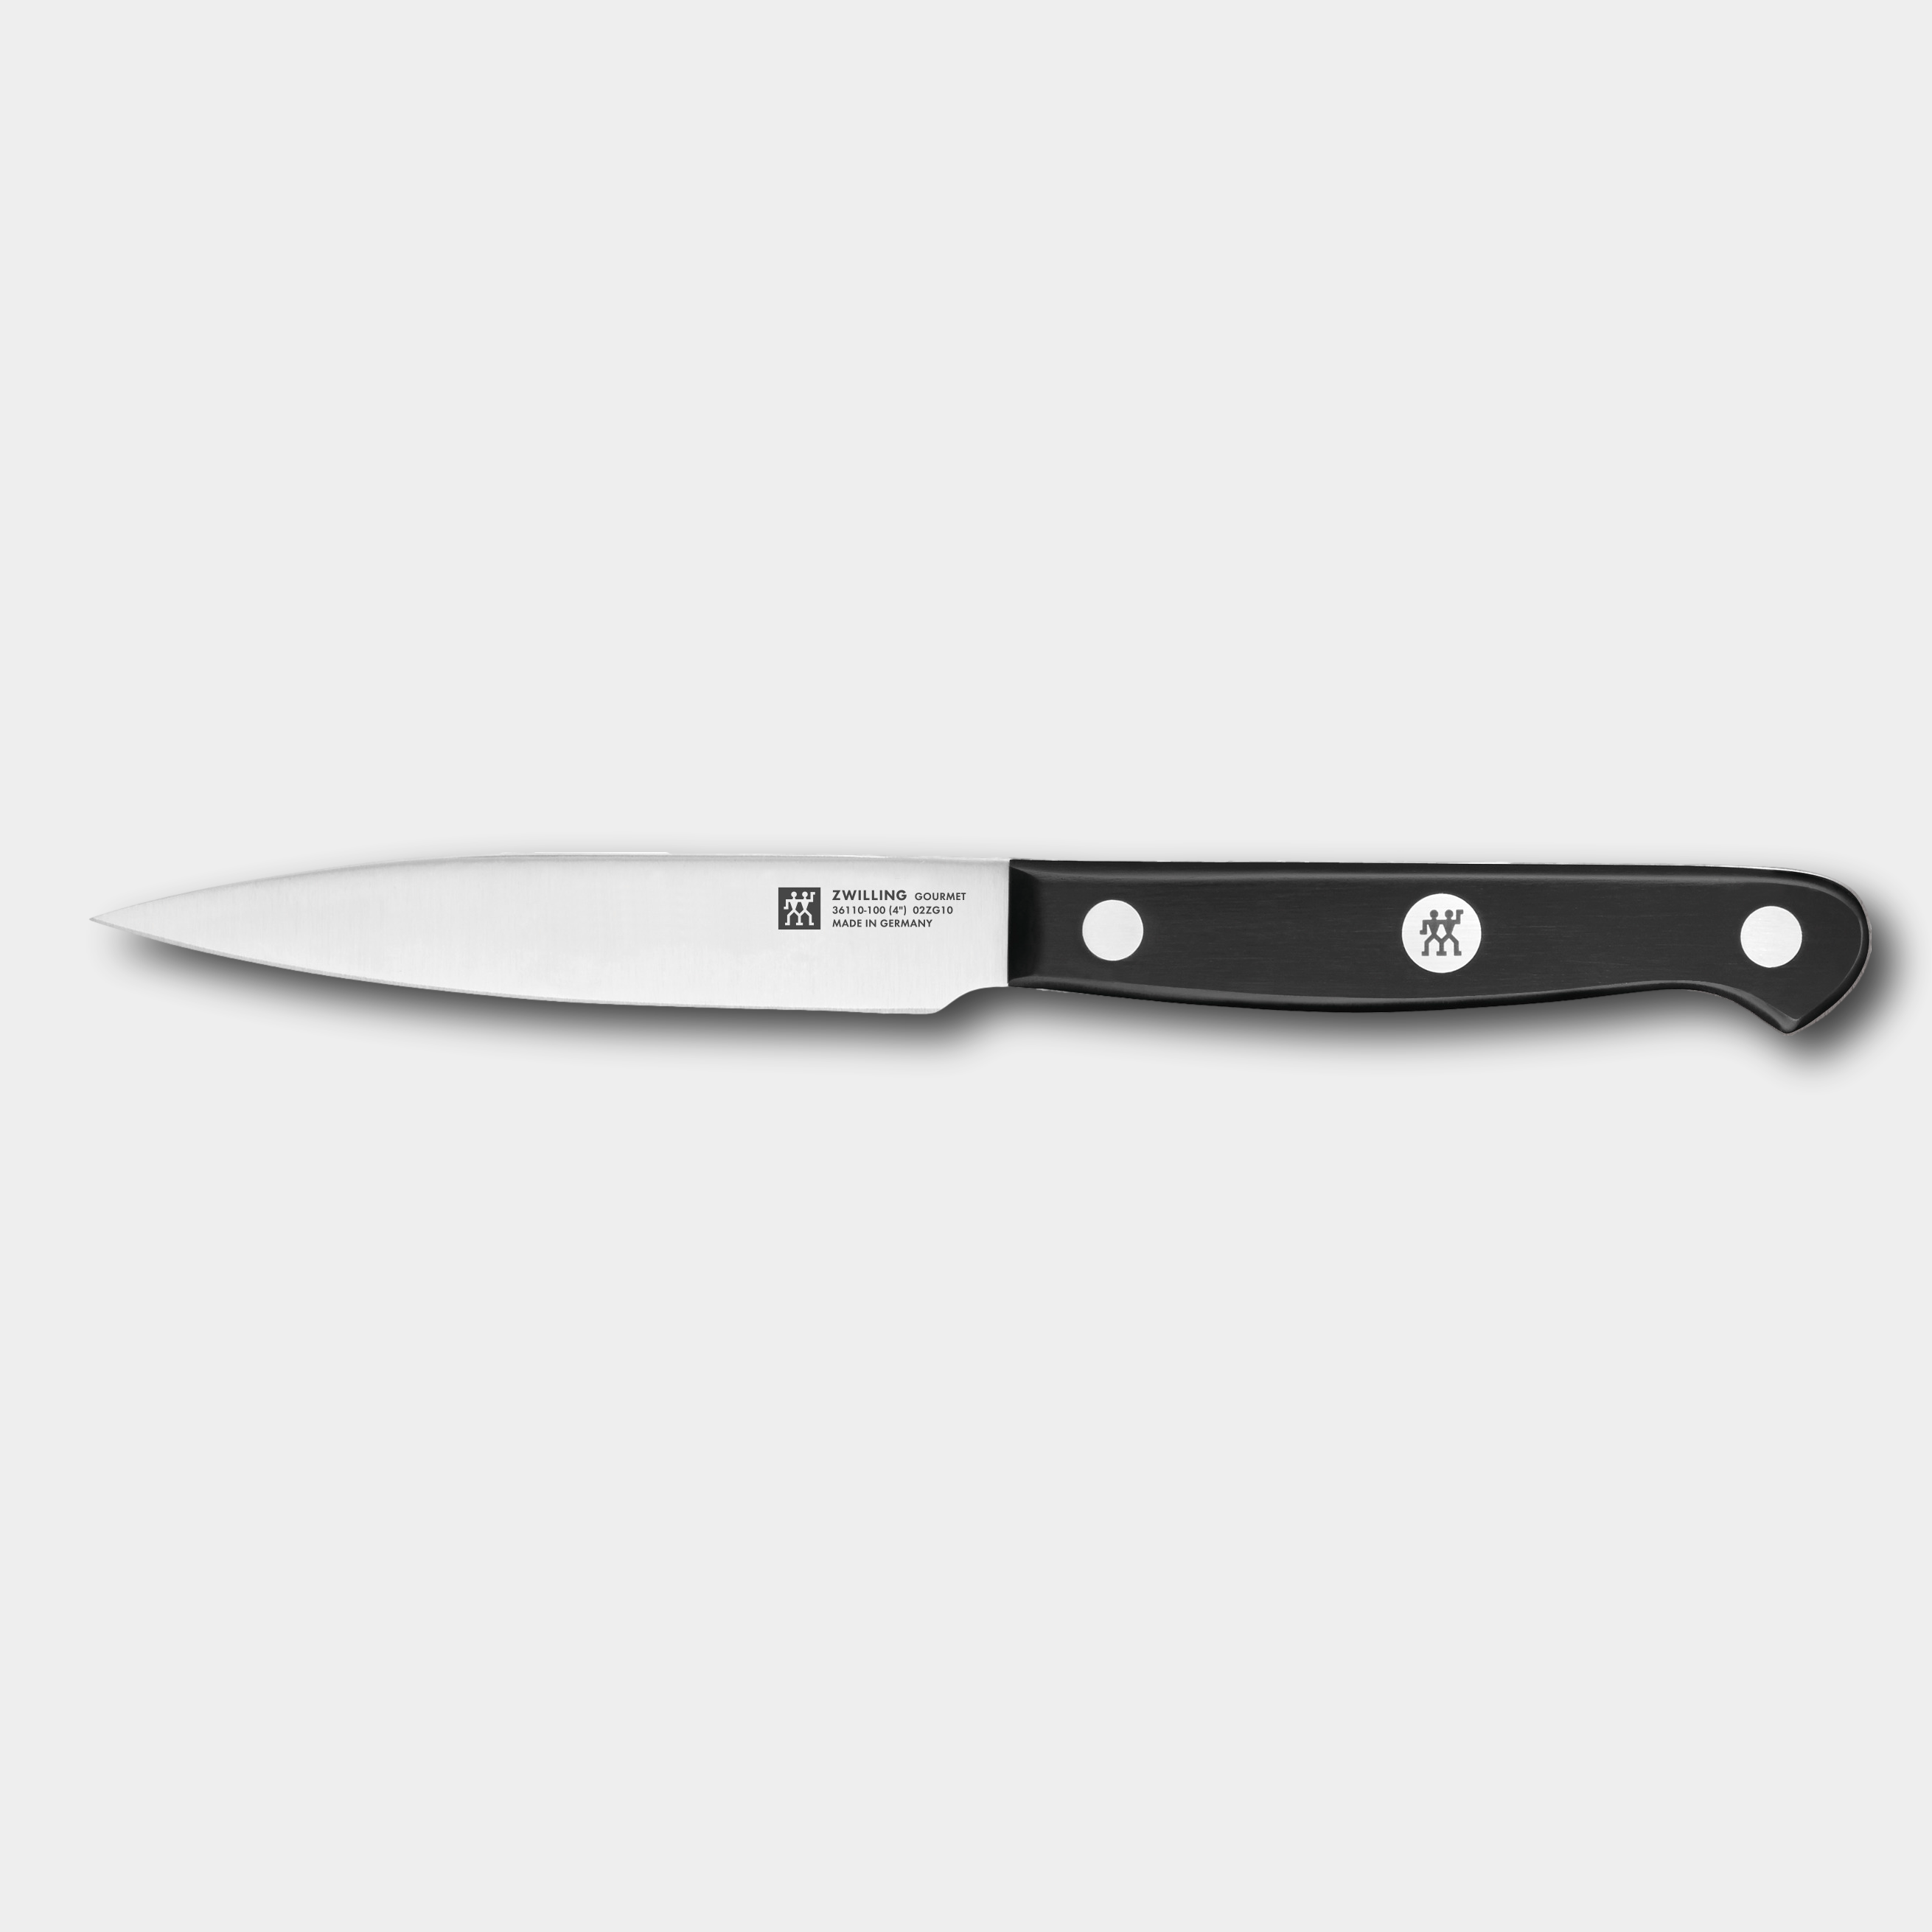 ZWILLING® Gourmet 7 Piece Knife Block Set